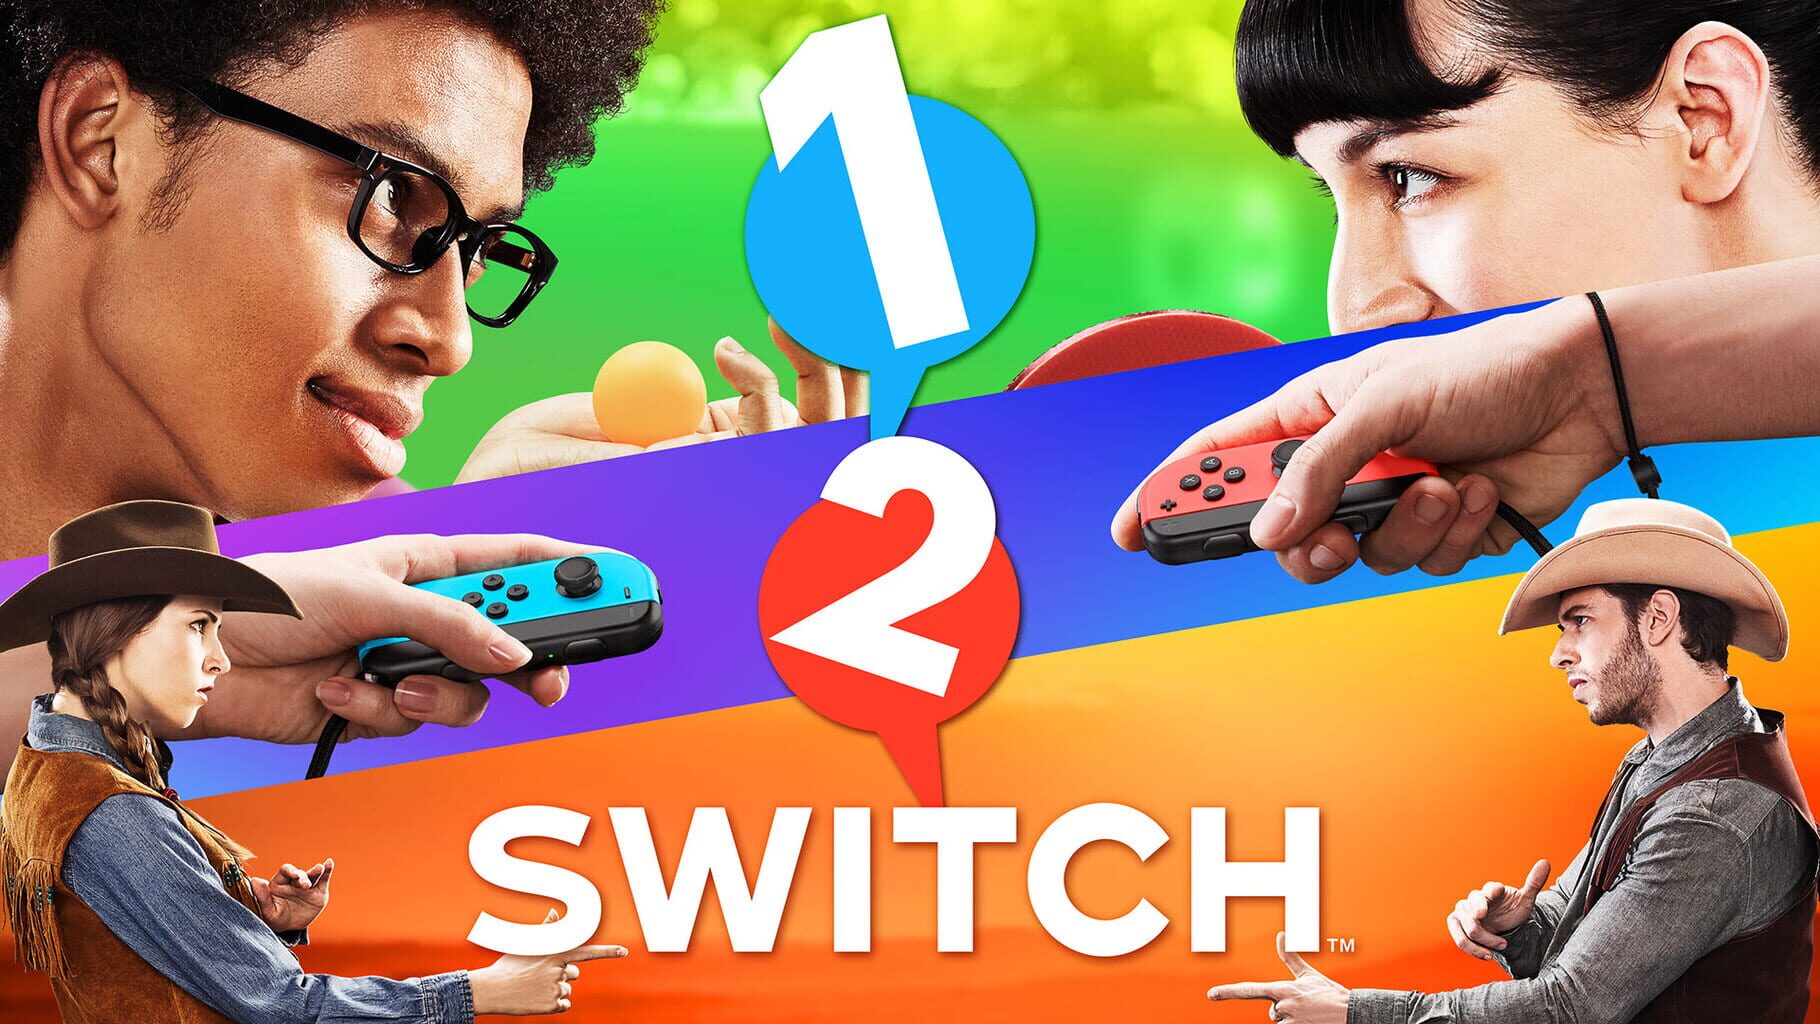 1-2-Switch artwork